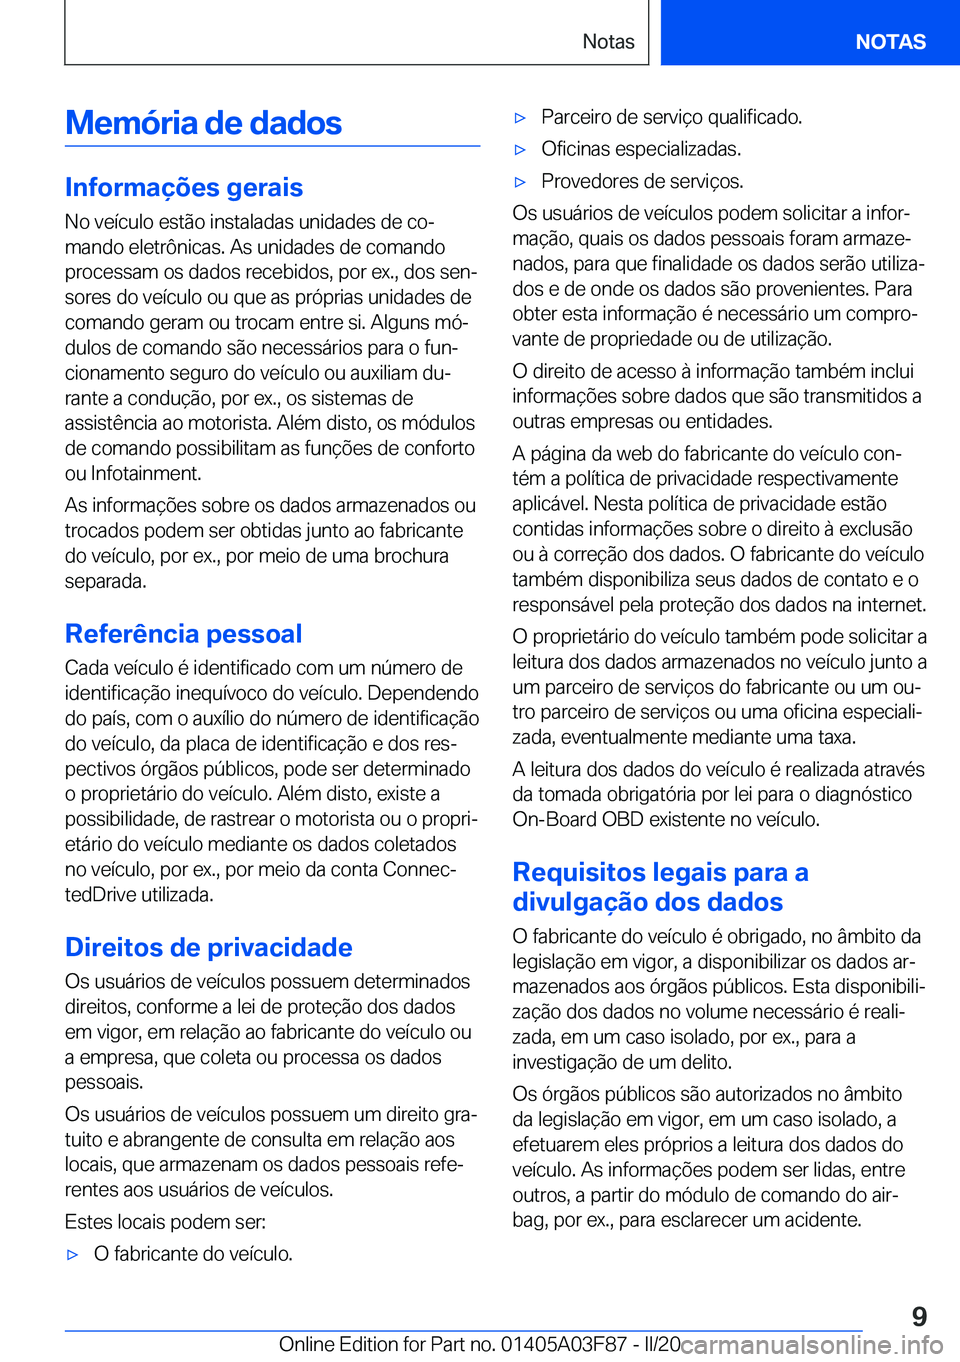 BMW 3 SERIES 2020  Manual do condutor (in Portuguese) �M�e�m�ó�r�i�a��d�e��d�a�d�o�s
�I�n�f�o�r�m�a�